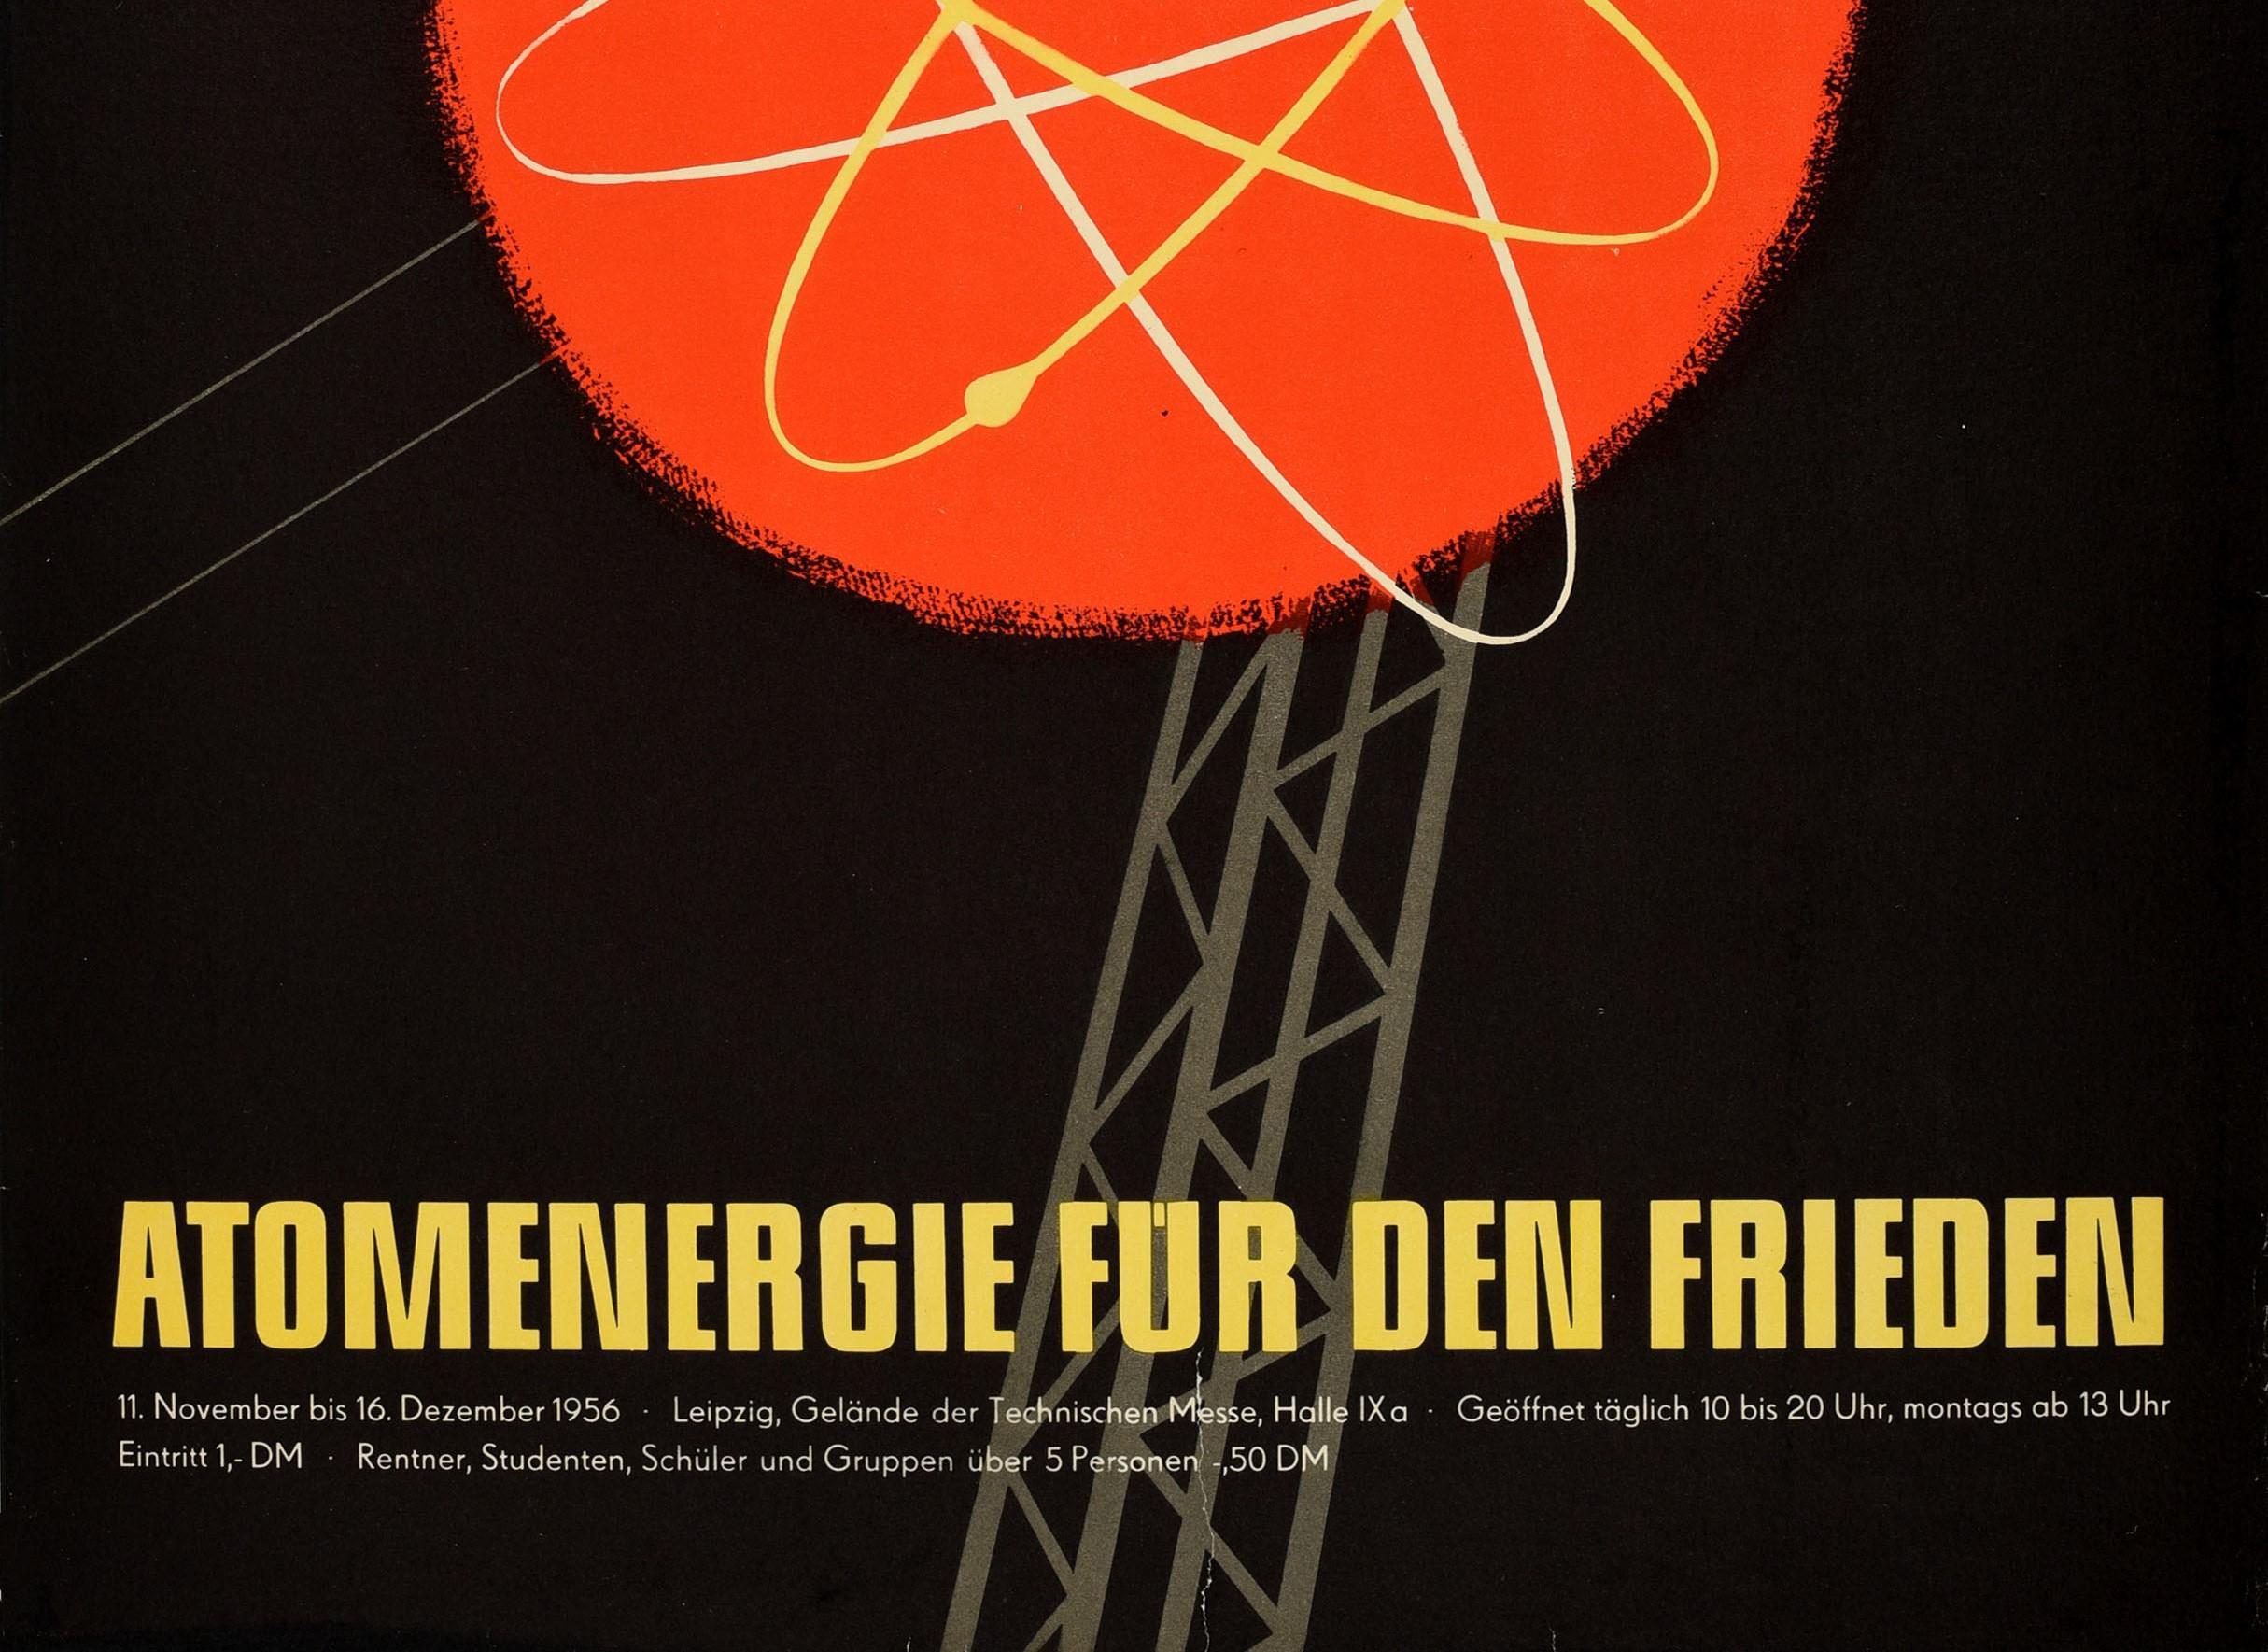 atomic energy poster